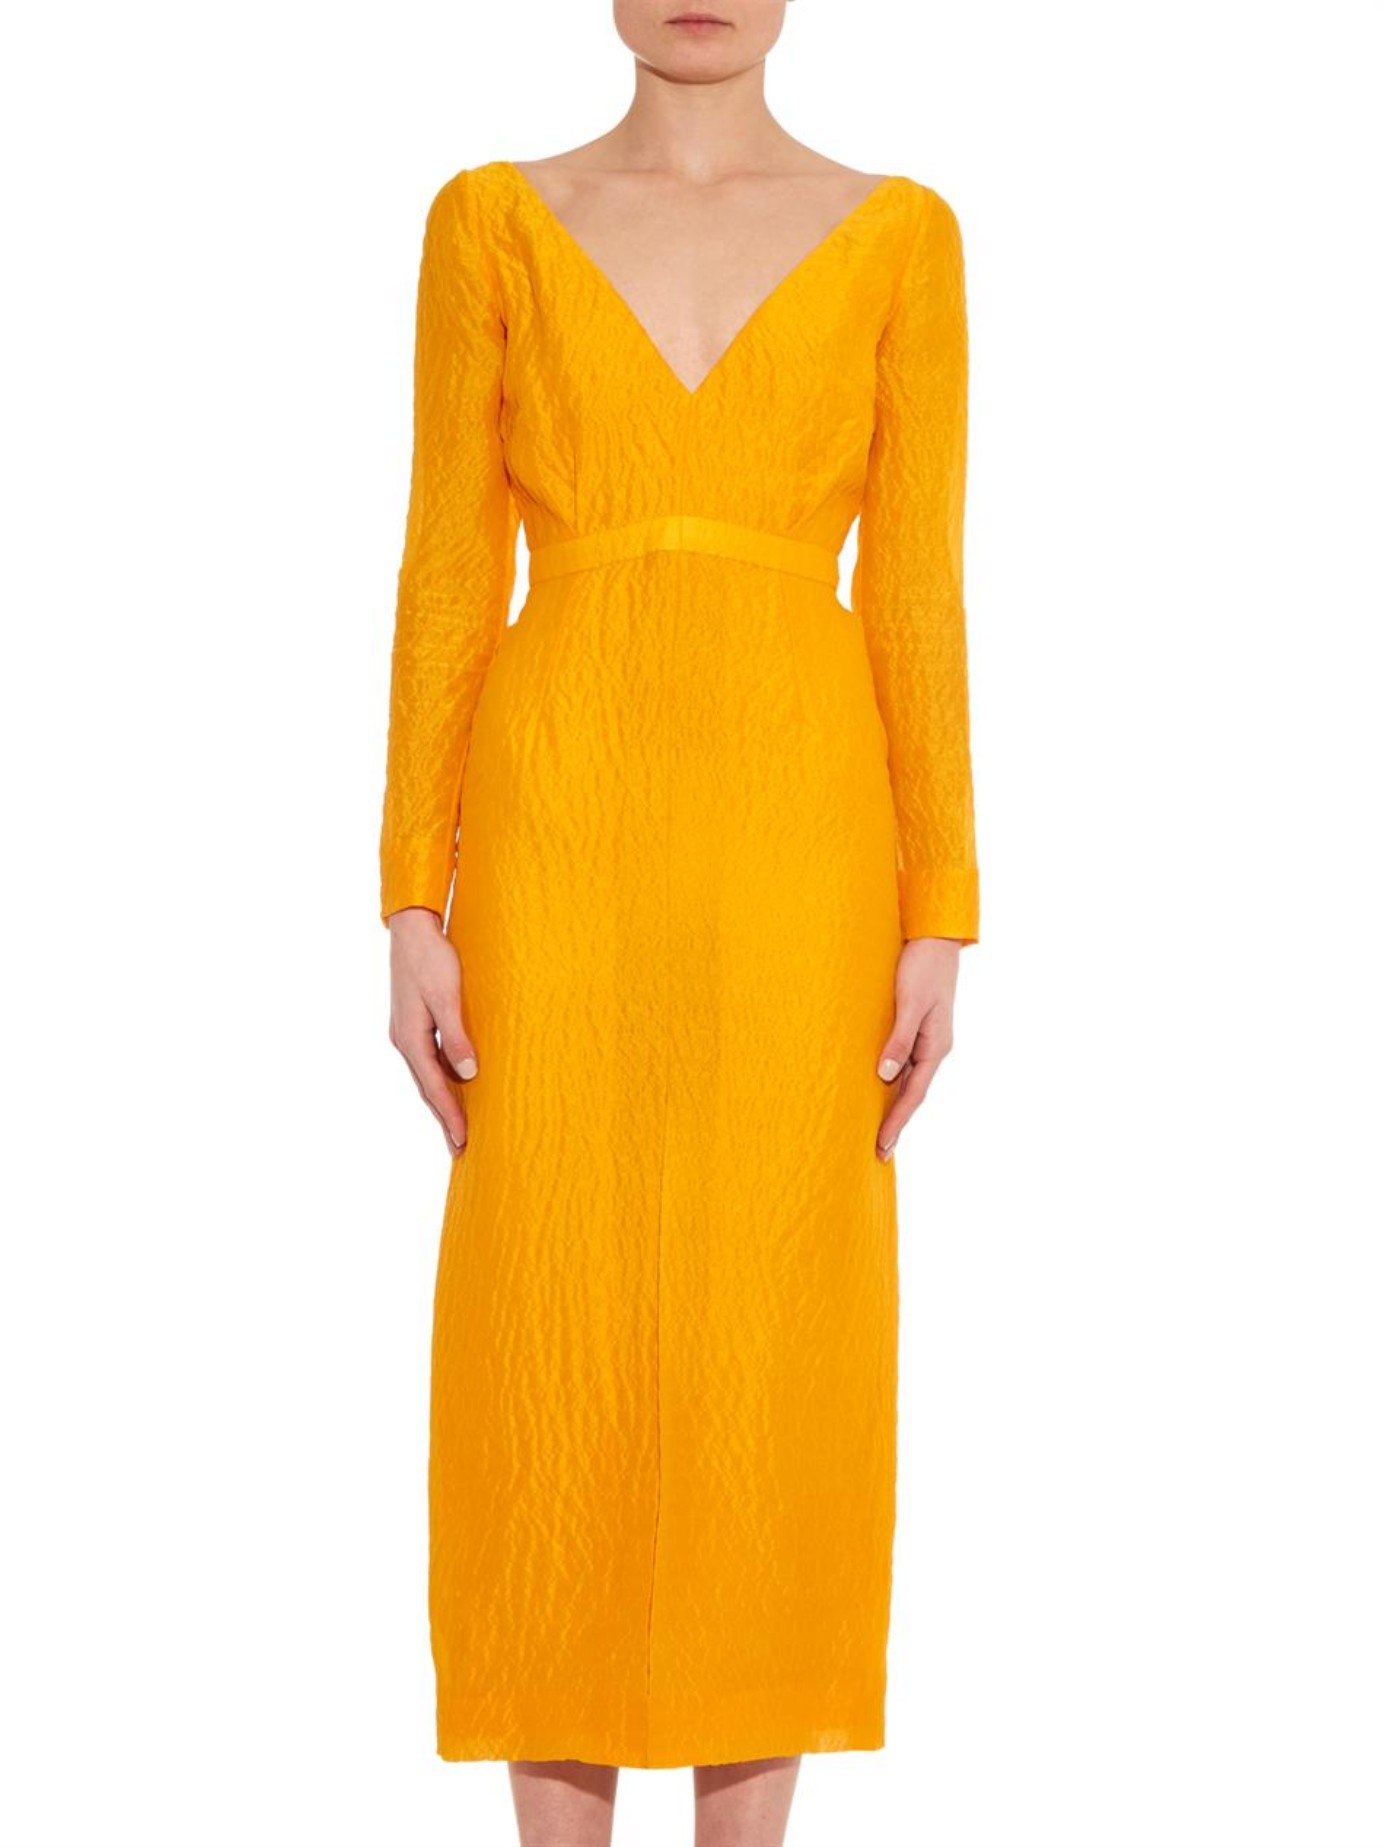 Lyst - Emilia Wickstead Emma Slit-Front Jacquard Dress in Yellow